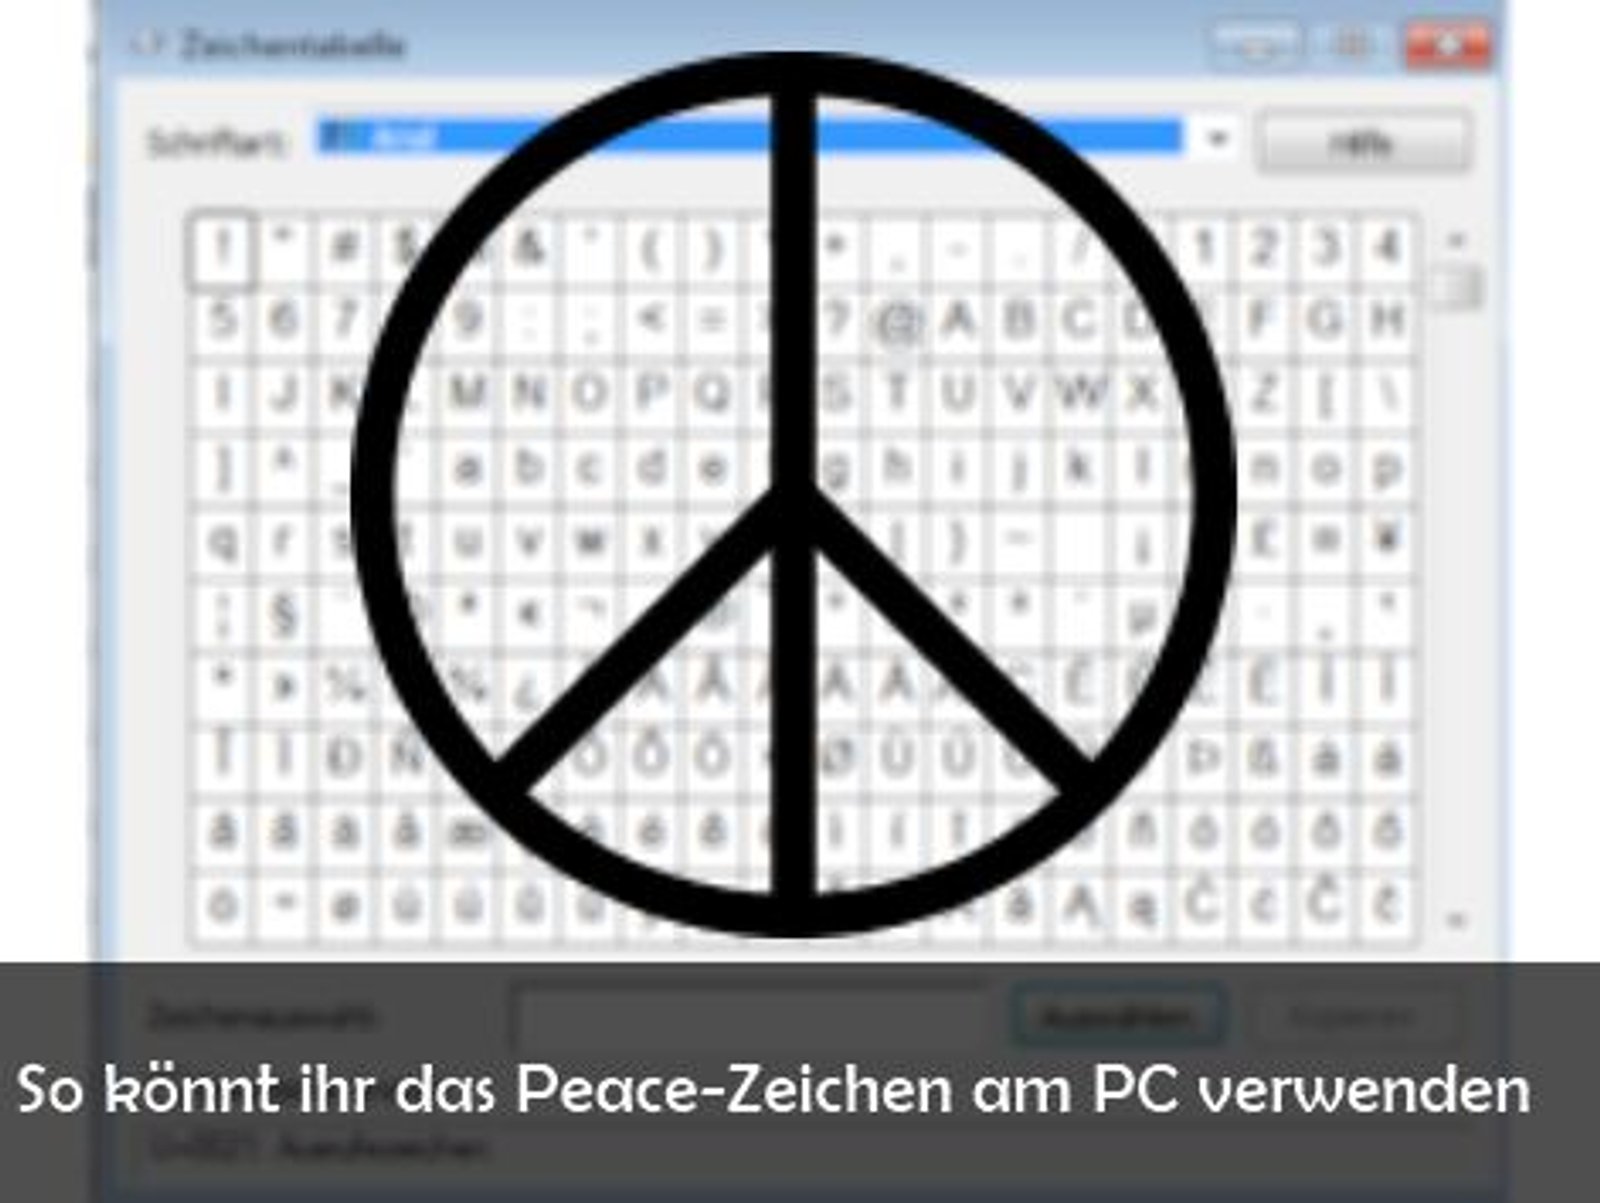 https://static.giga.de/wp-content/uploads/2013/10/peace-zeichen-pc-schreiben-rcm1600x1200u.jpg